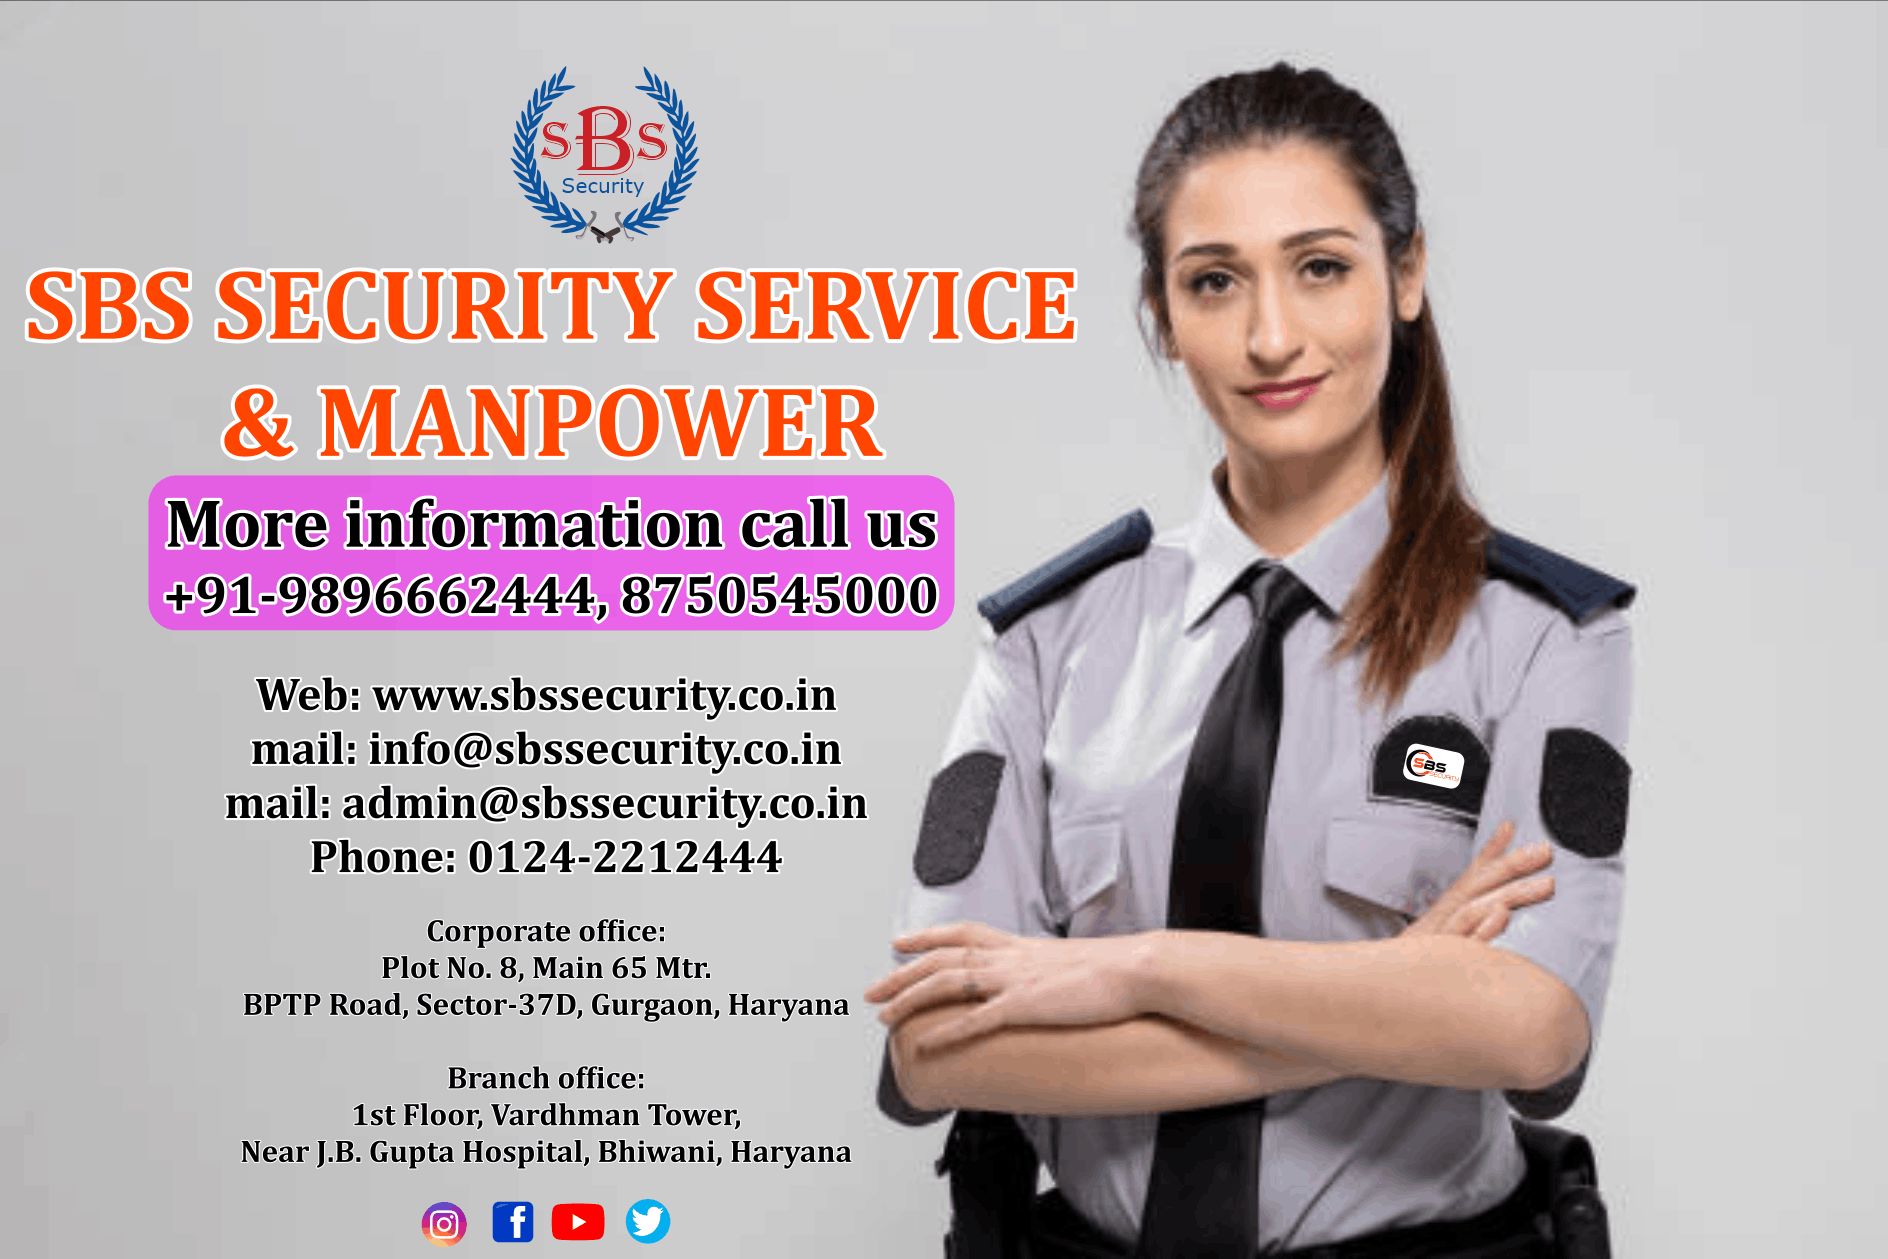 SBS Security Service & Manpower